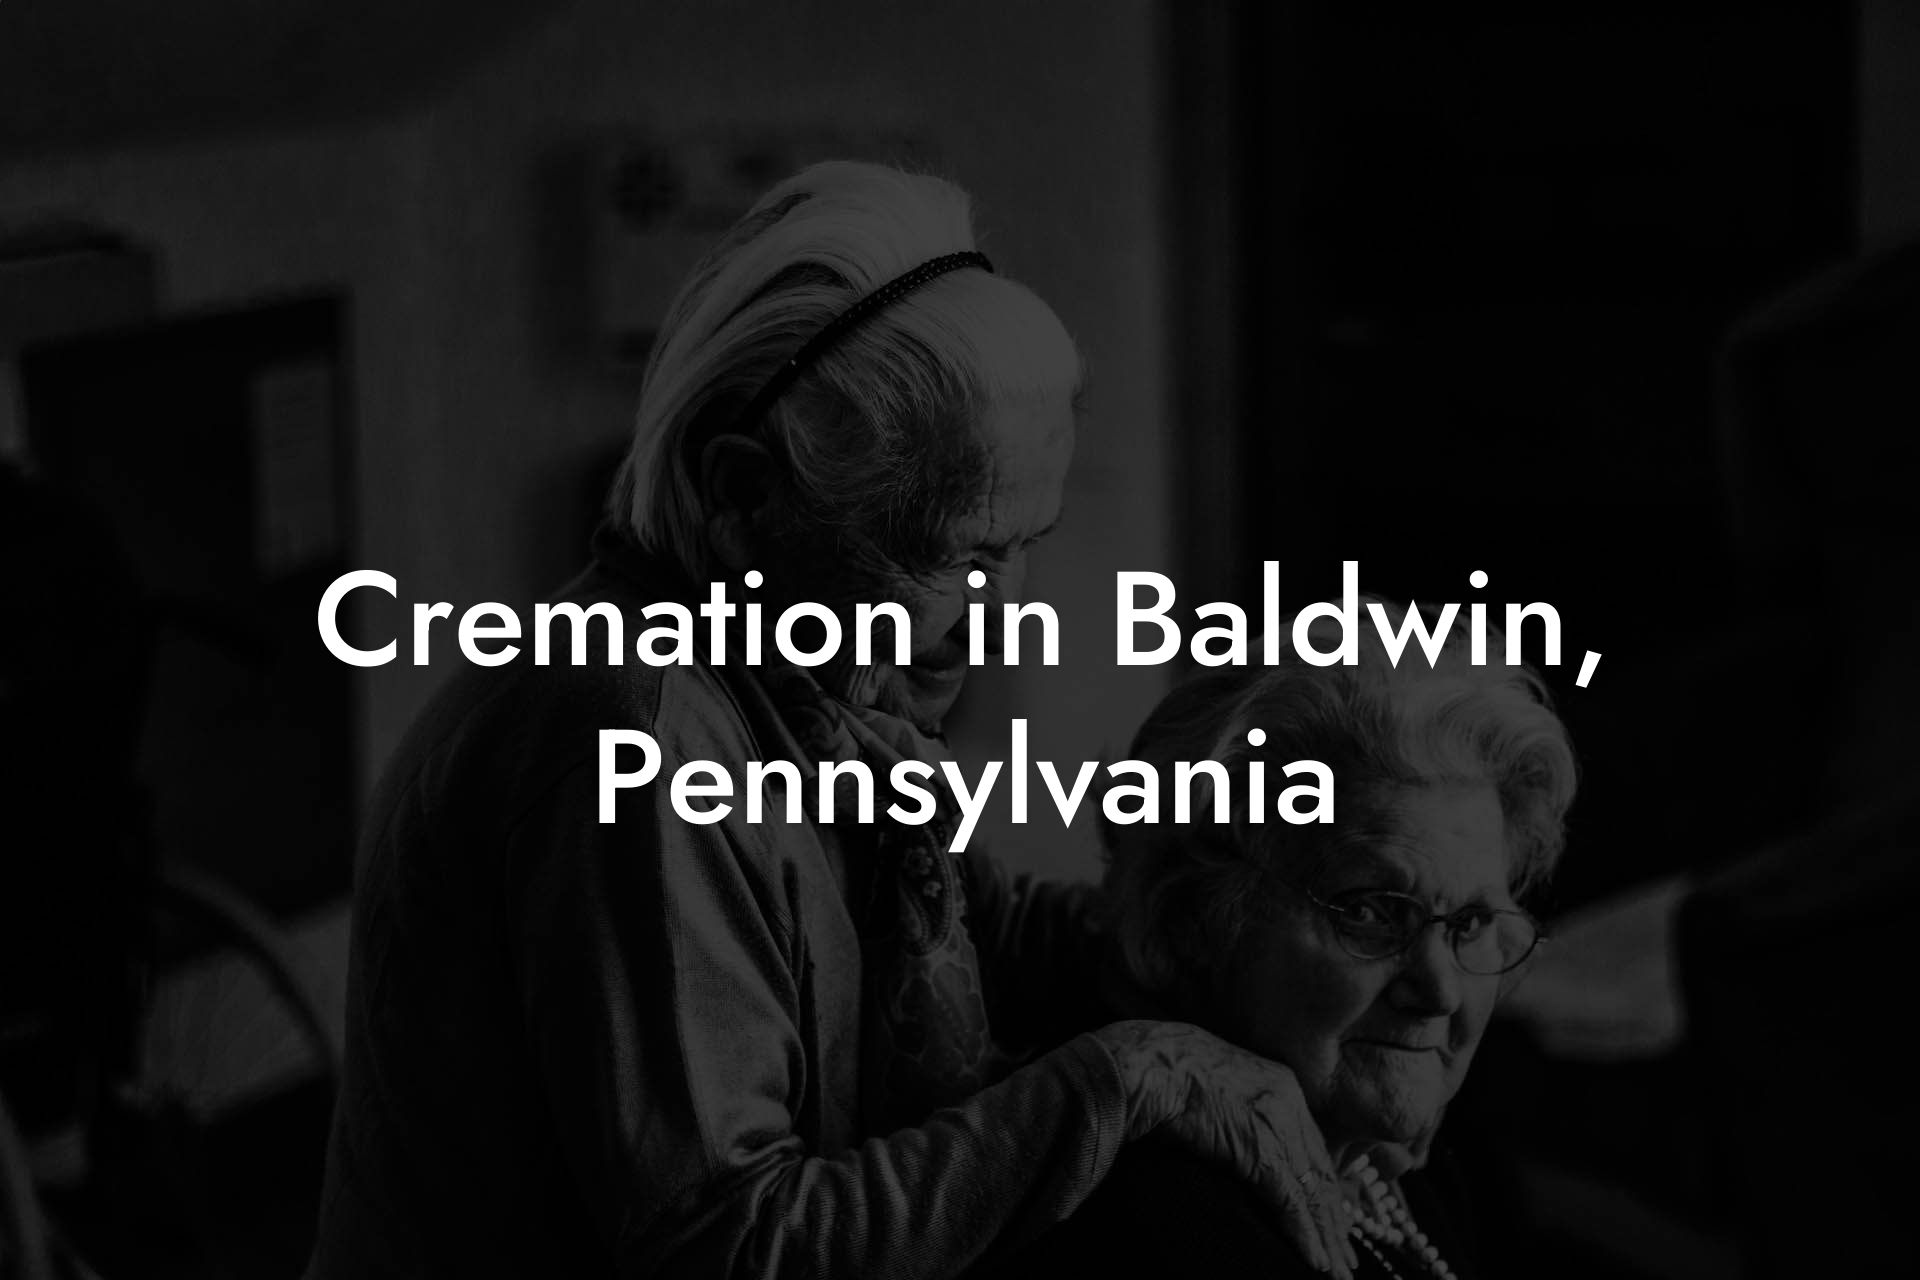 Cremation in Baldwin, Pennsylvania